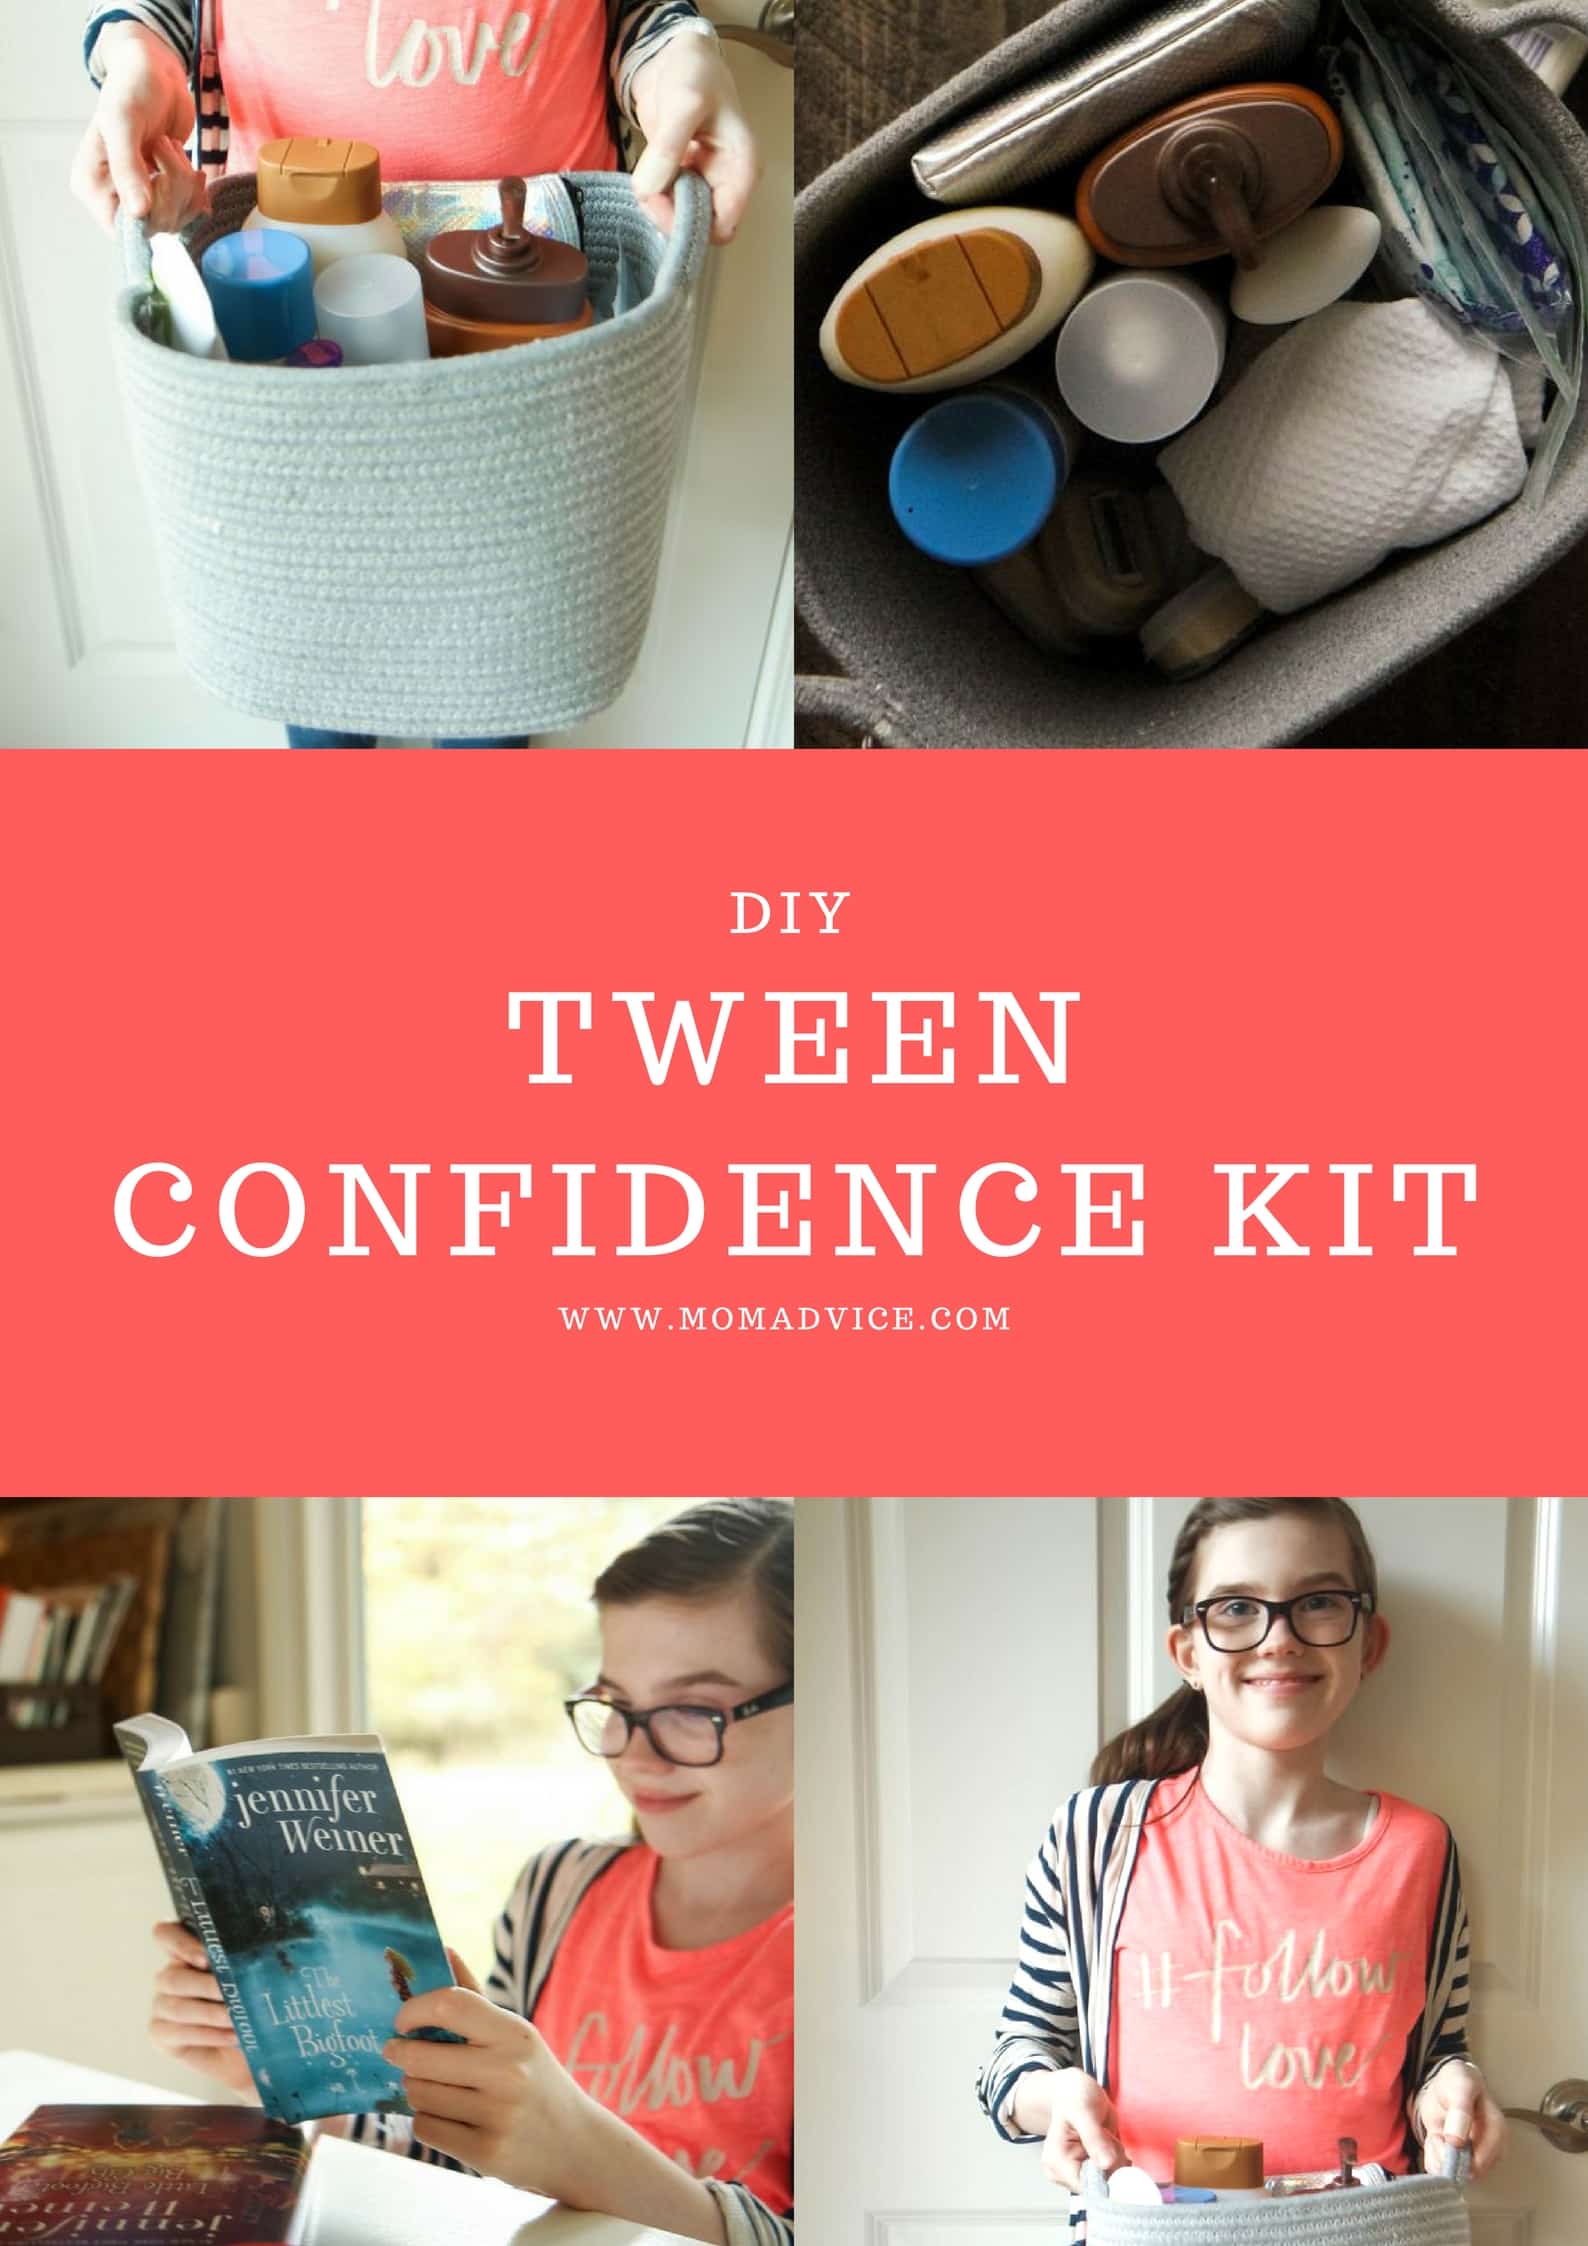 DIY Tween Confidence Kit from MomAdvice.com